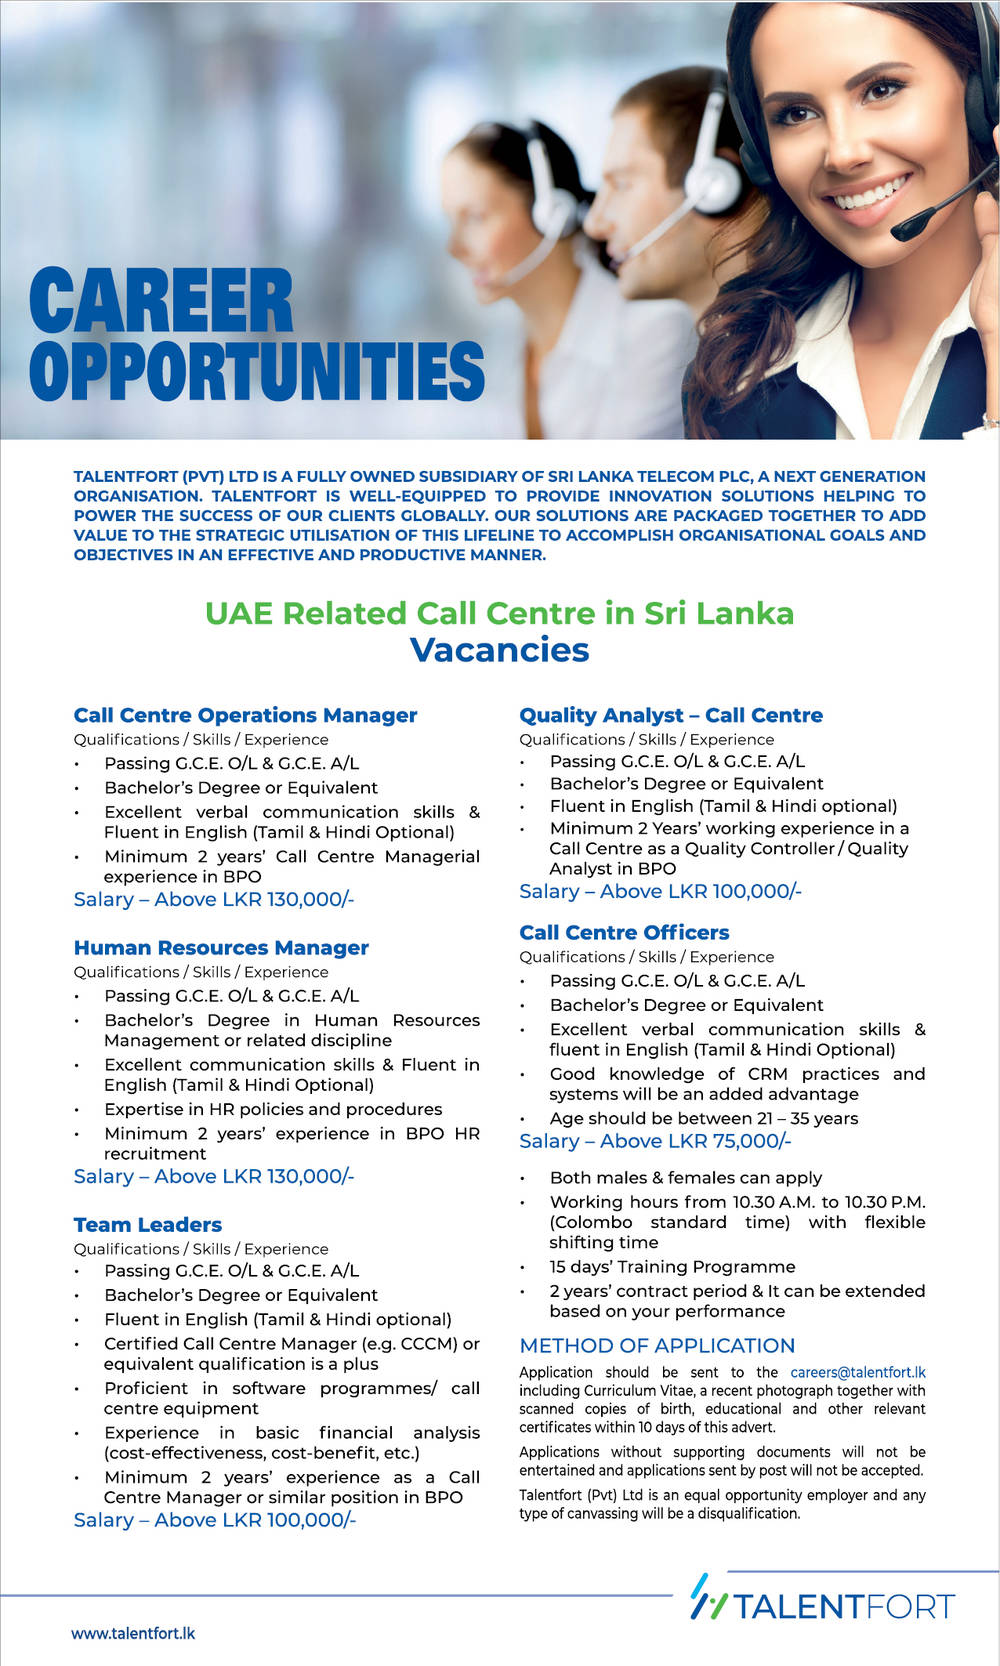 UAE Related Call Centre Vacancies in Sri Lanka Jobs Vacancies